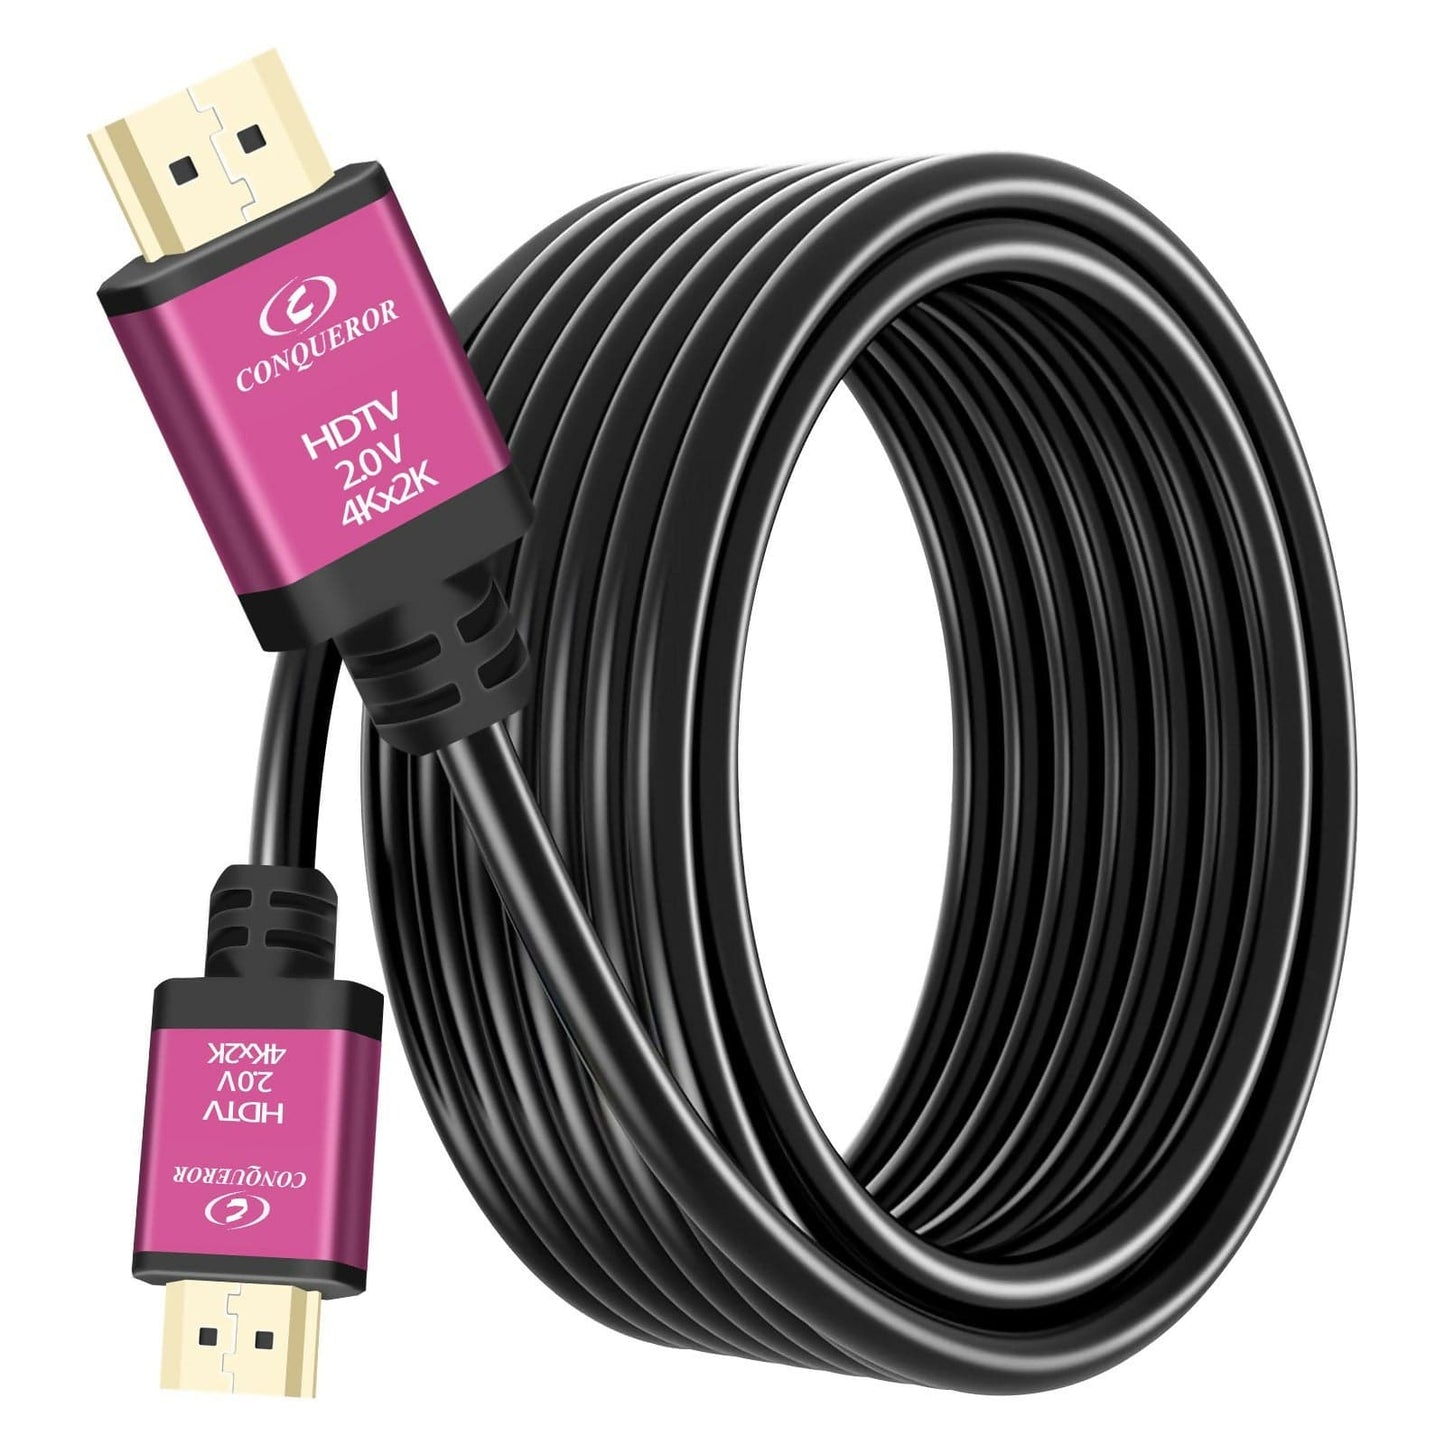 Provideolb HDMI Cables Conqueror HDMI Cable 10 Meter Black - C45DP